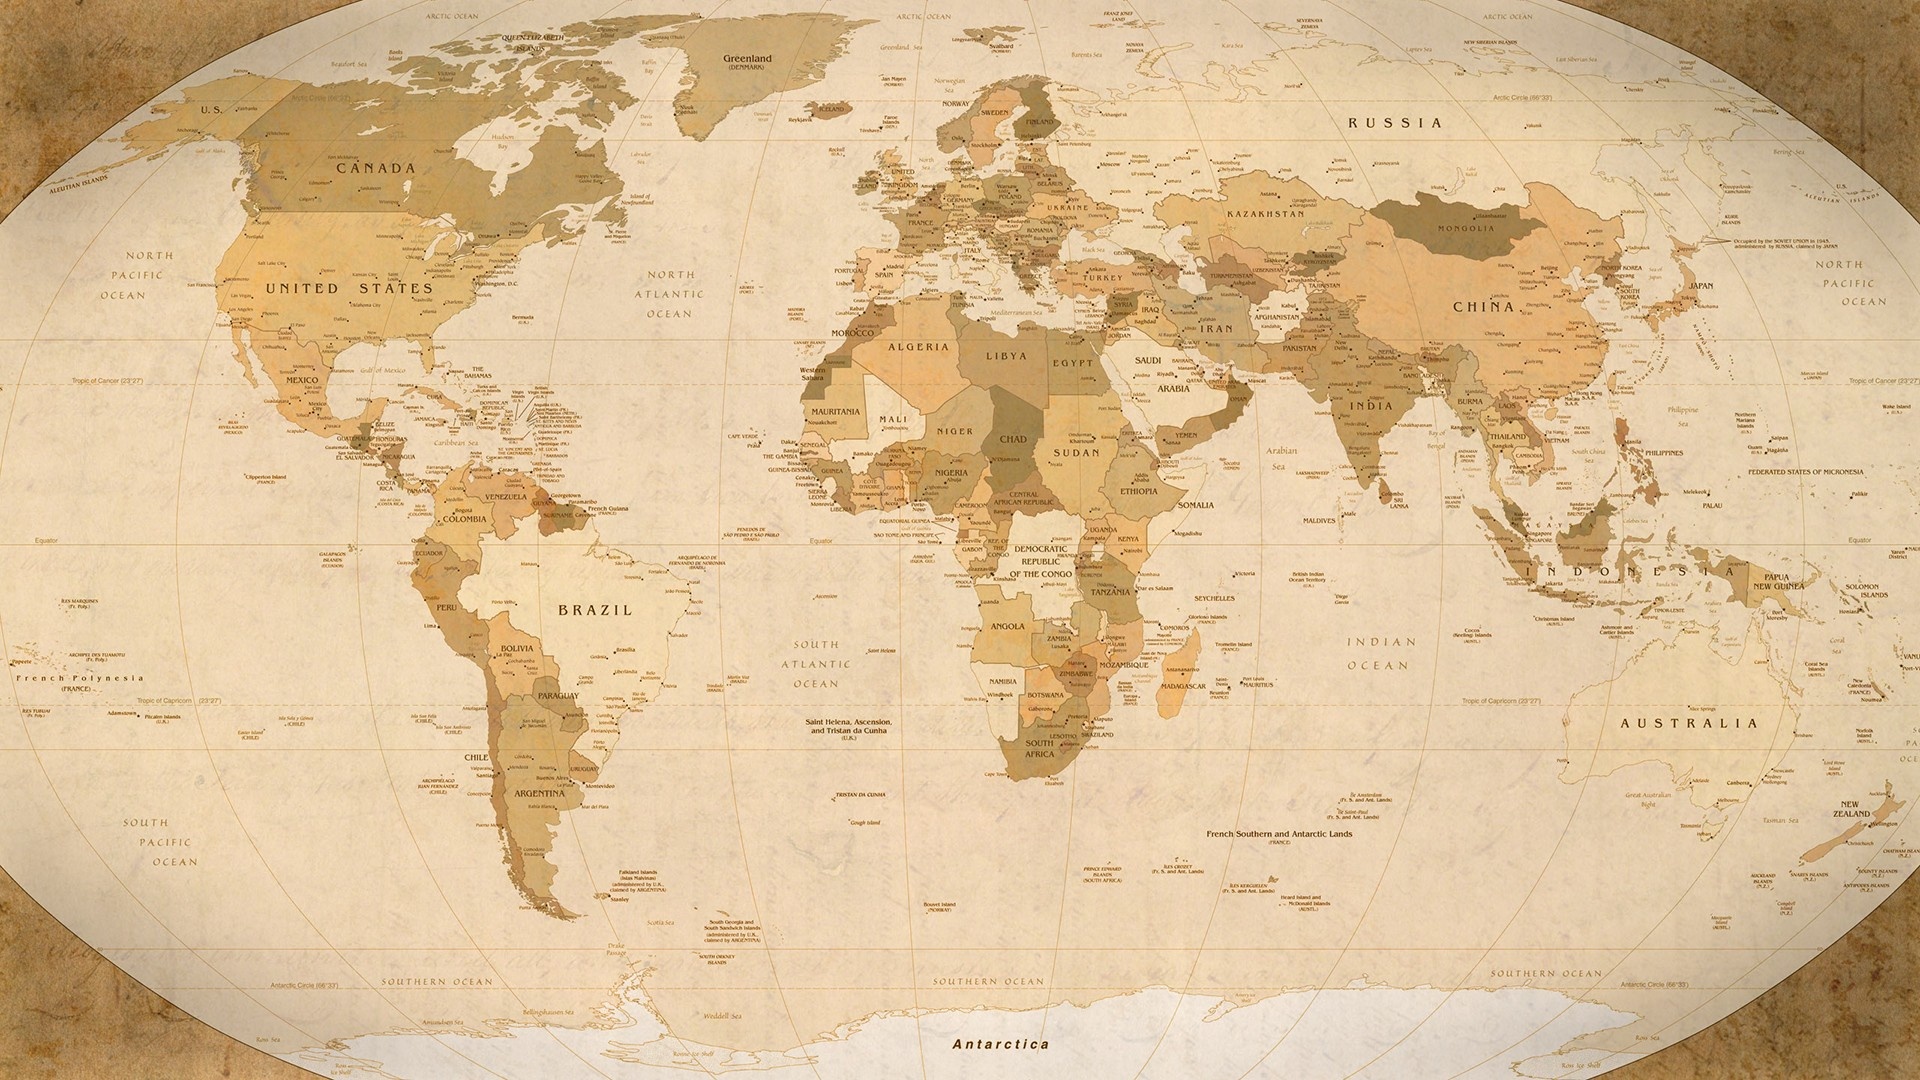 Geography travels, Maps digital art, World map wallpaper, Explore 48 geography wallpapers, 1920x1080 Full HD Desktop